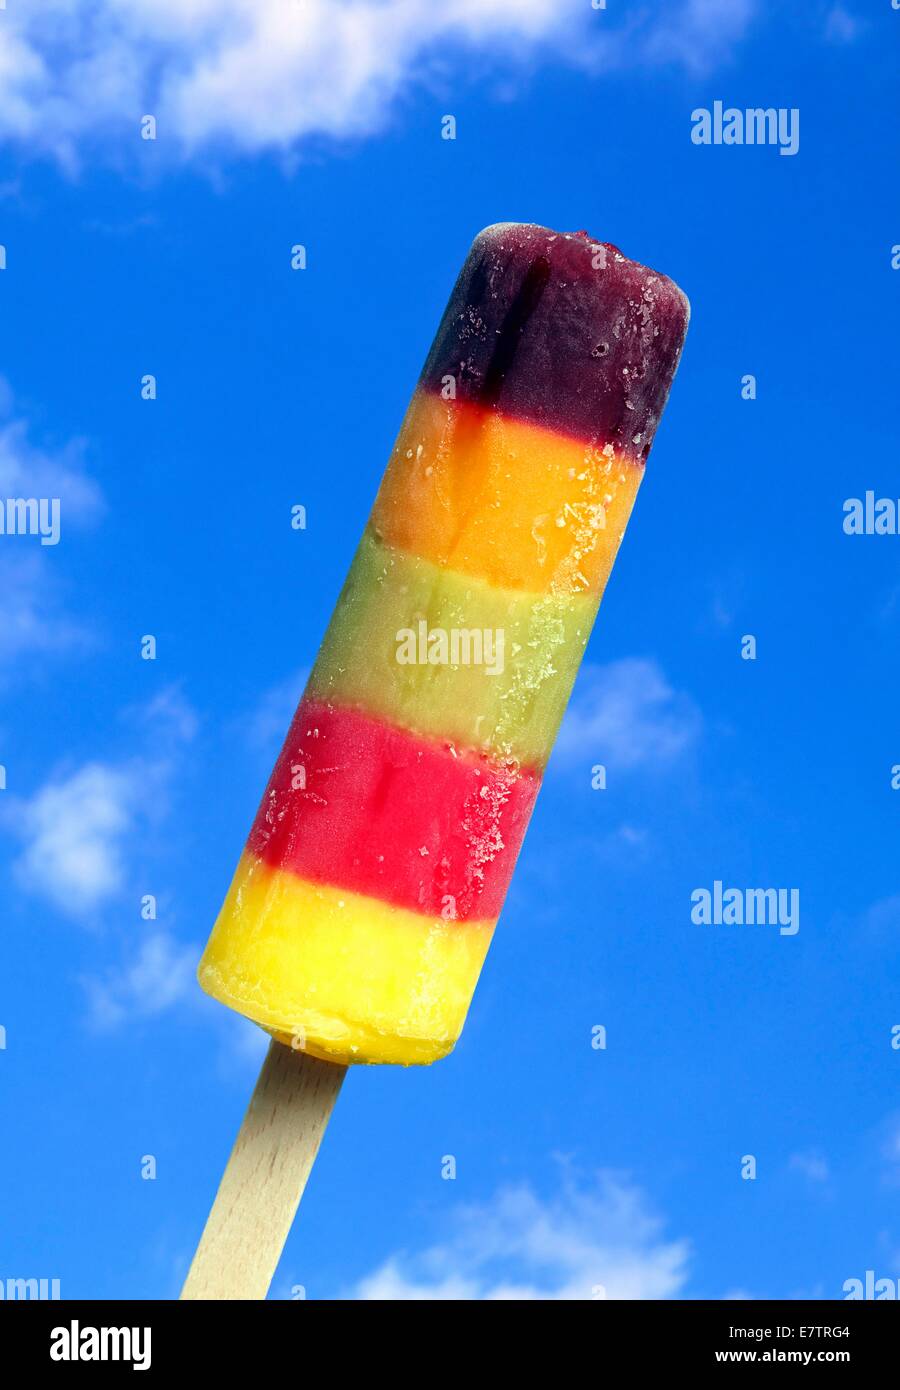 Ice lolly against blue sky. Stock Photo